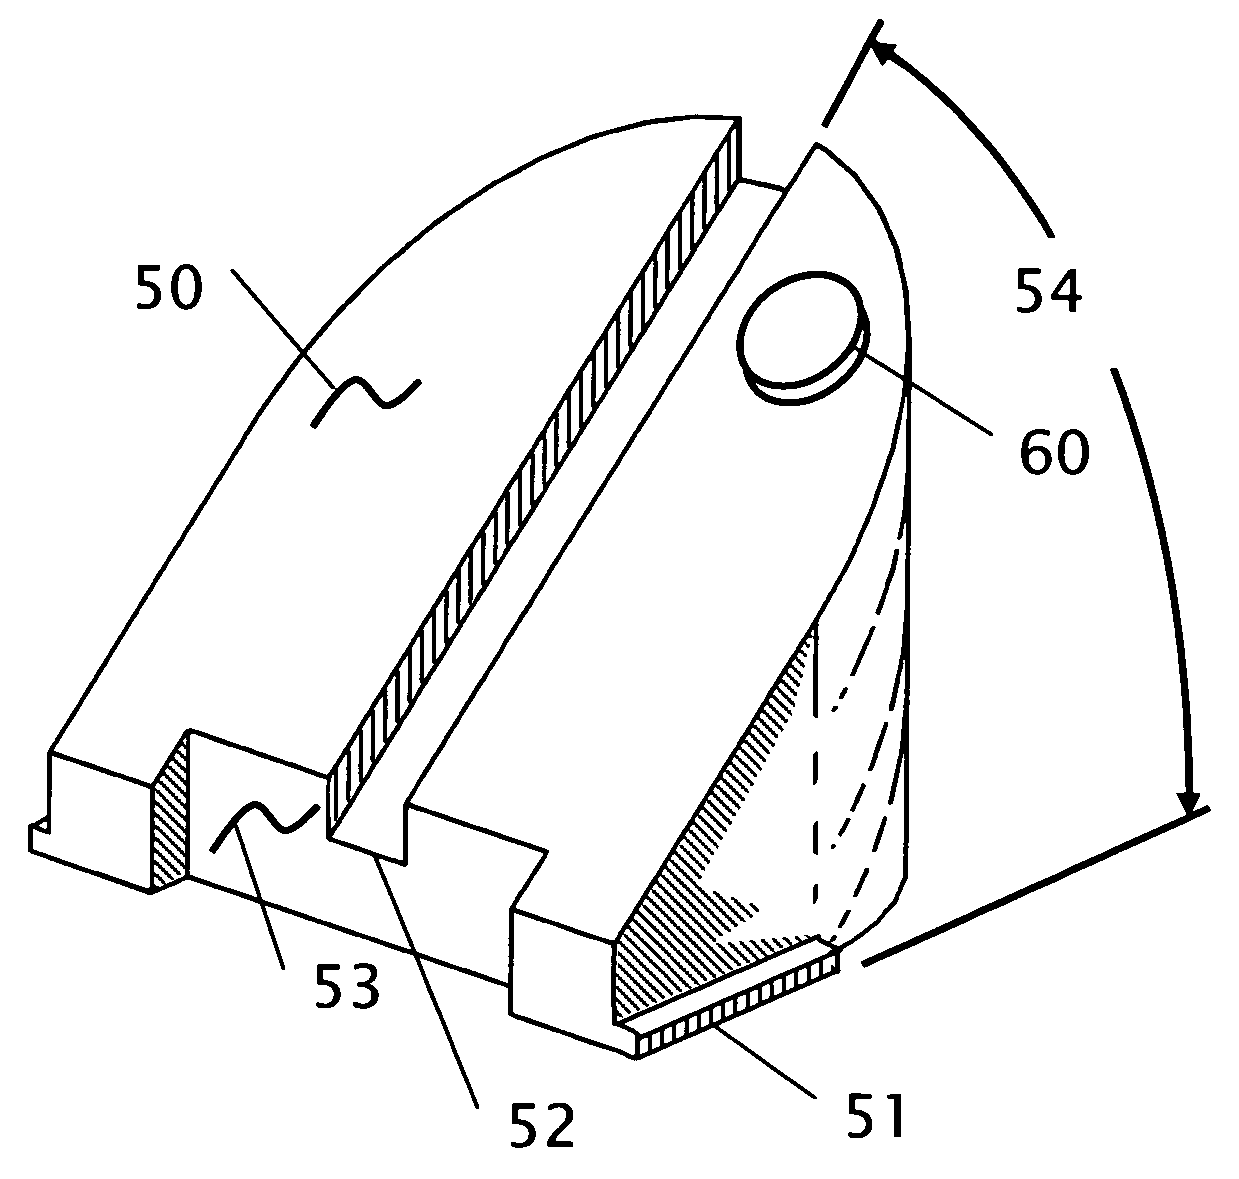 Multi-bladed razor cartridge sharpener with aloe vera gel lubricant